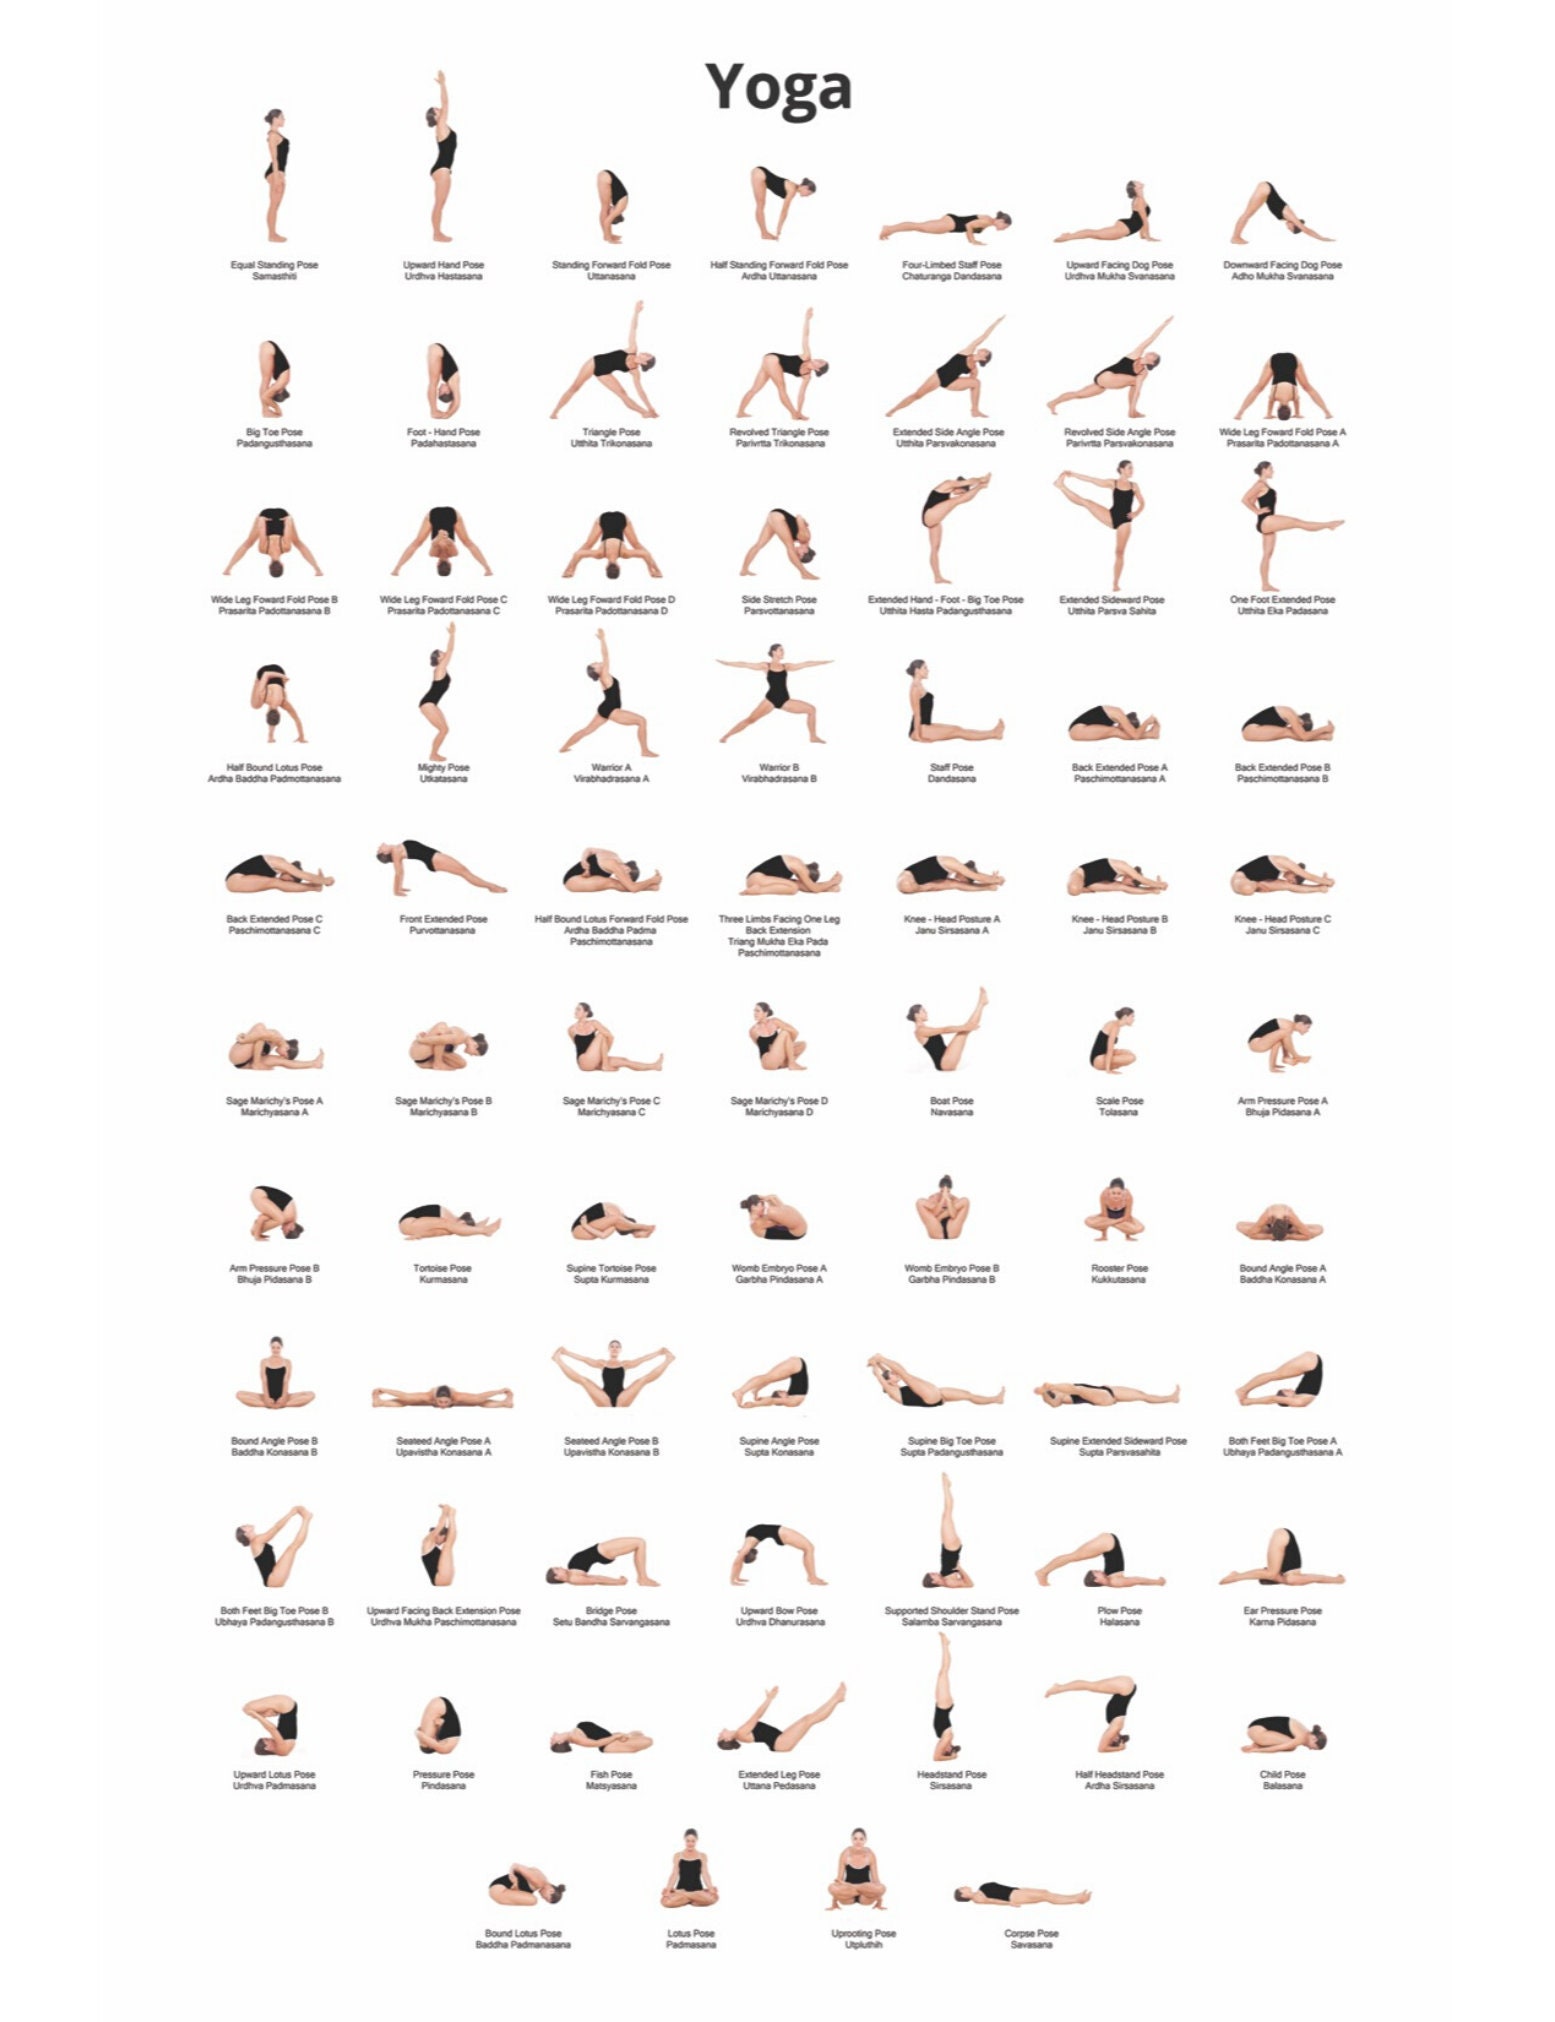 5 yoga asanas to practice daily: Alia Bhatt's trainer shares tips | Health  - Hindustan Times